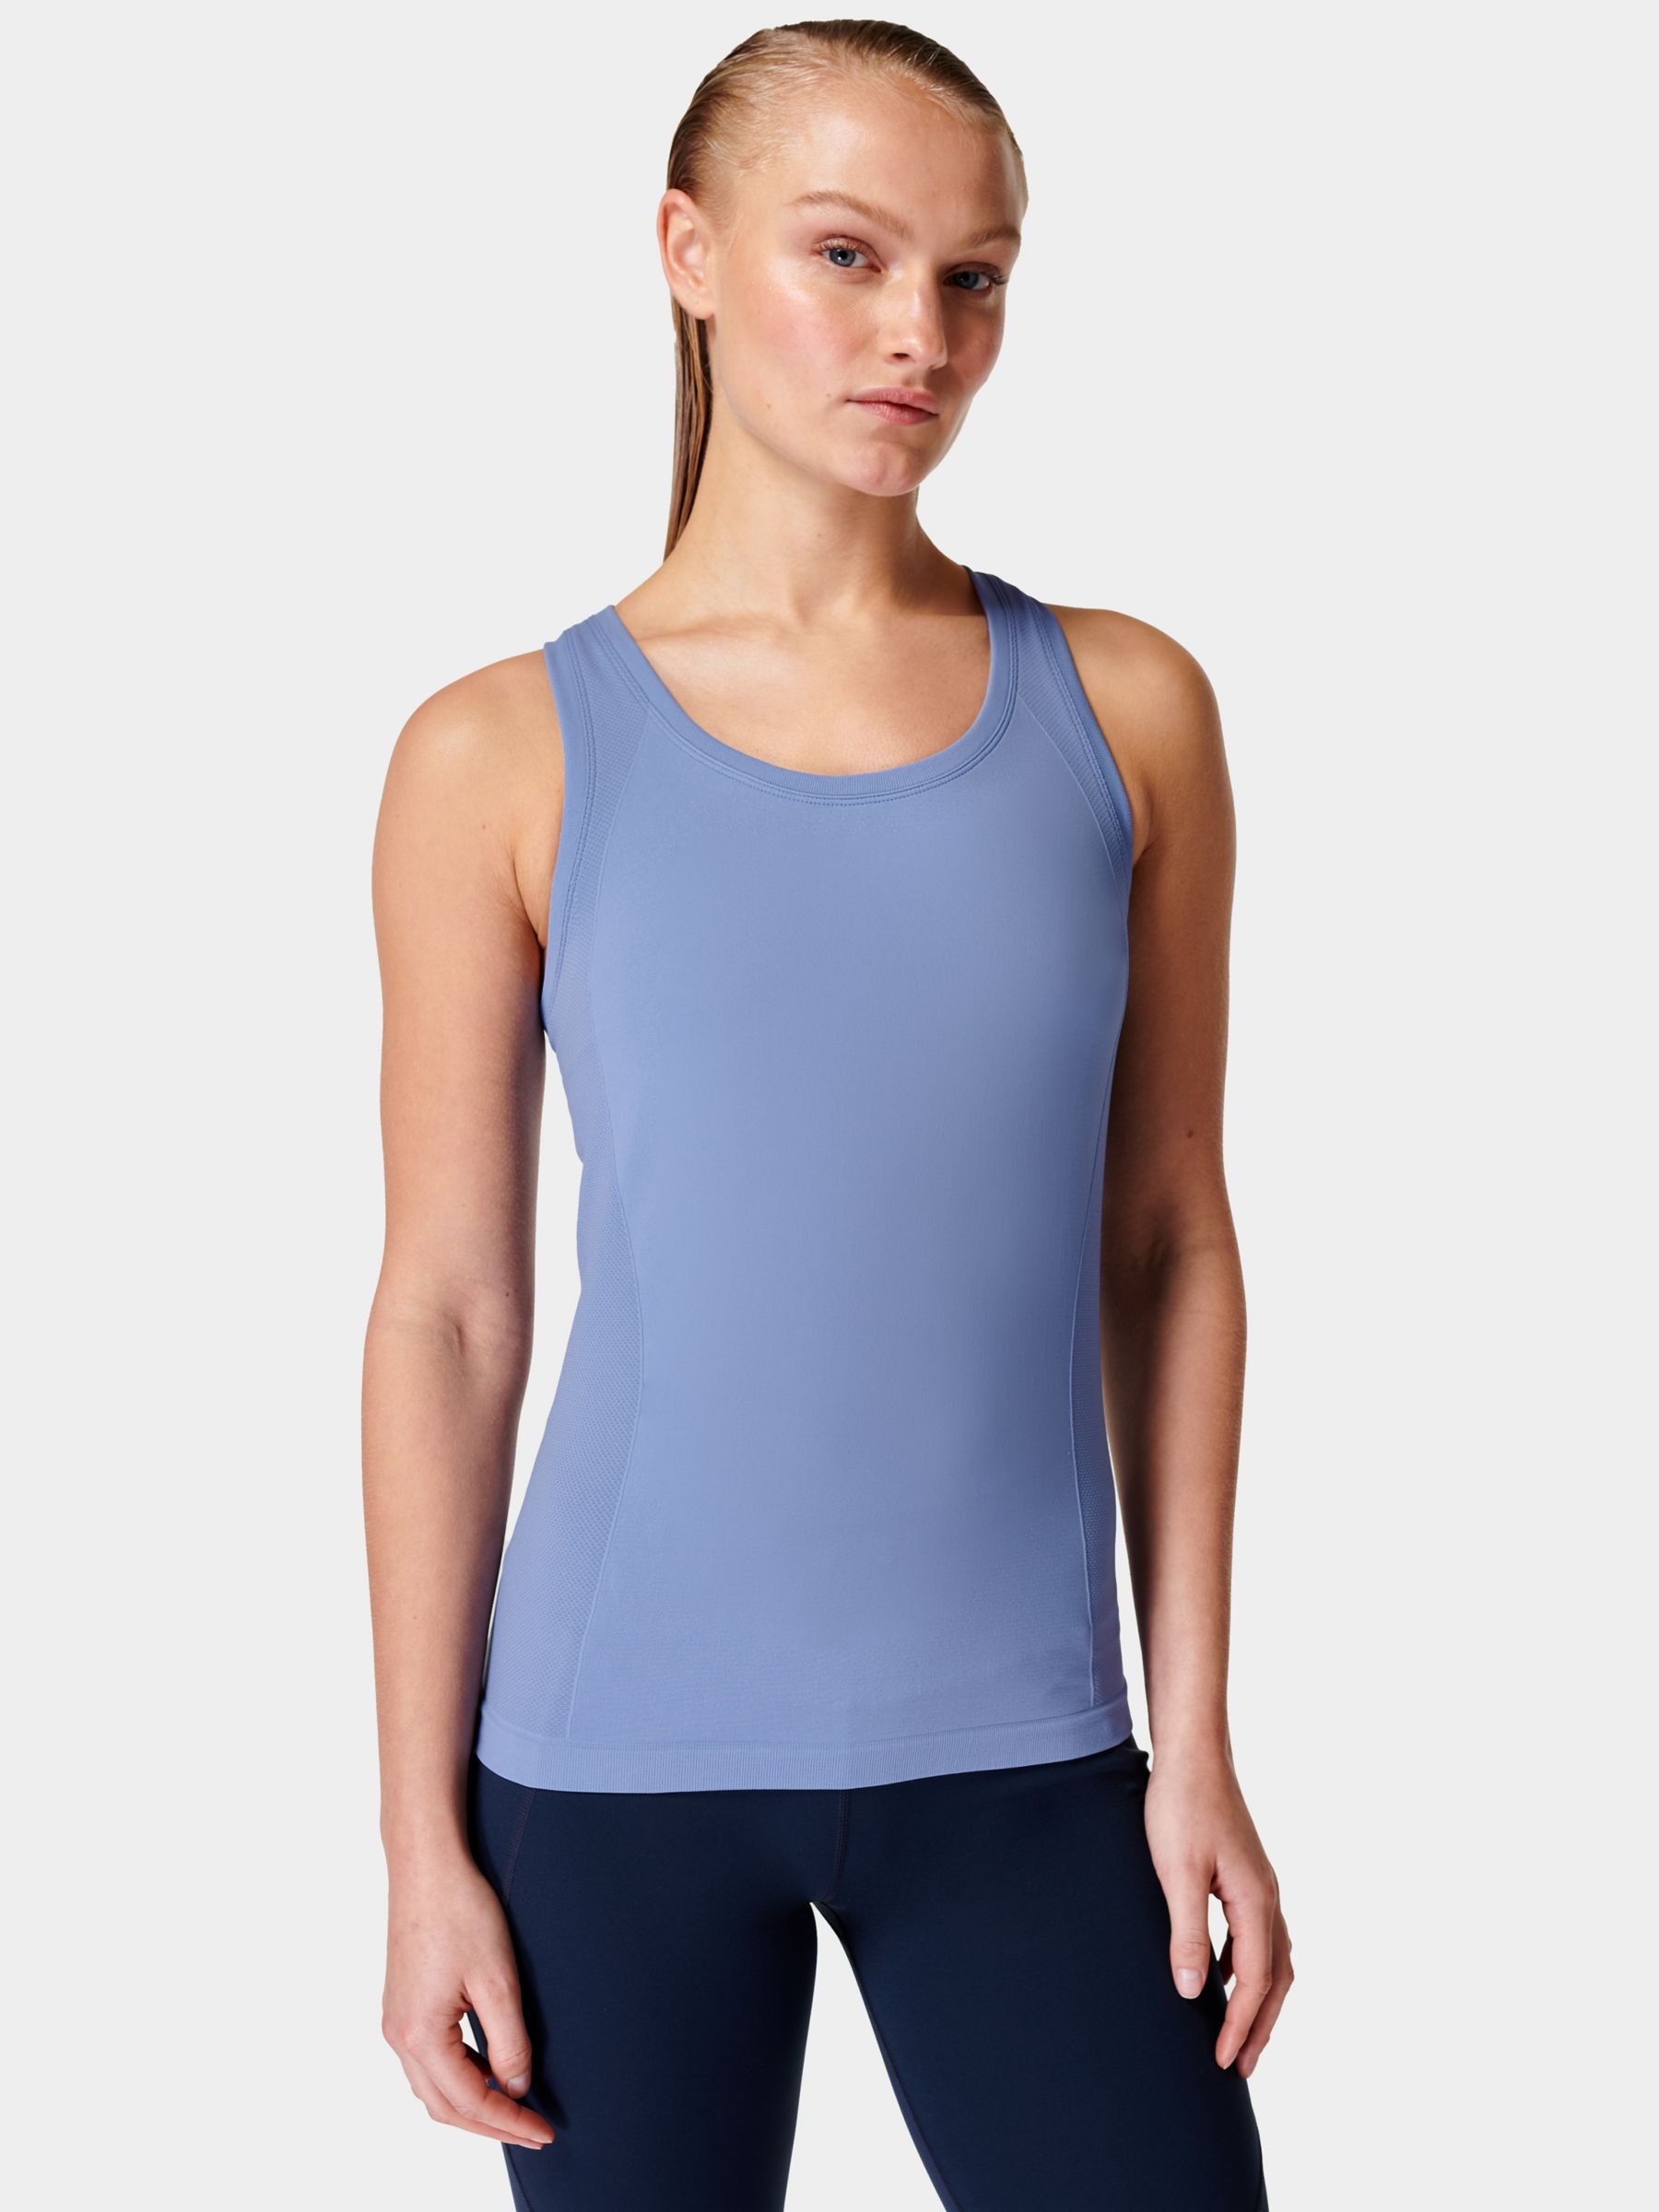 Sweaty Betty Athlete Seamless Workout Tank Top, Fluid Blue, XS